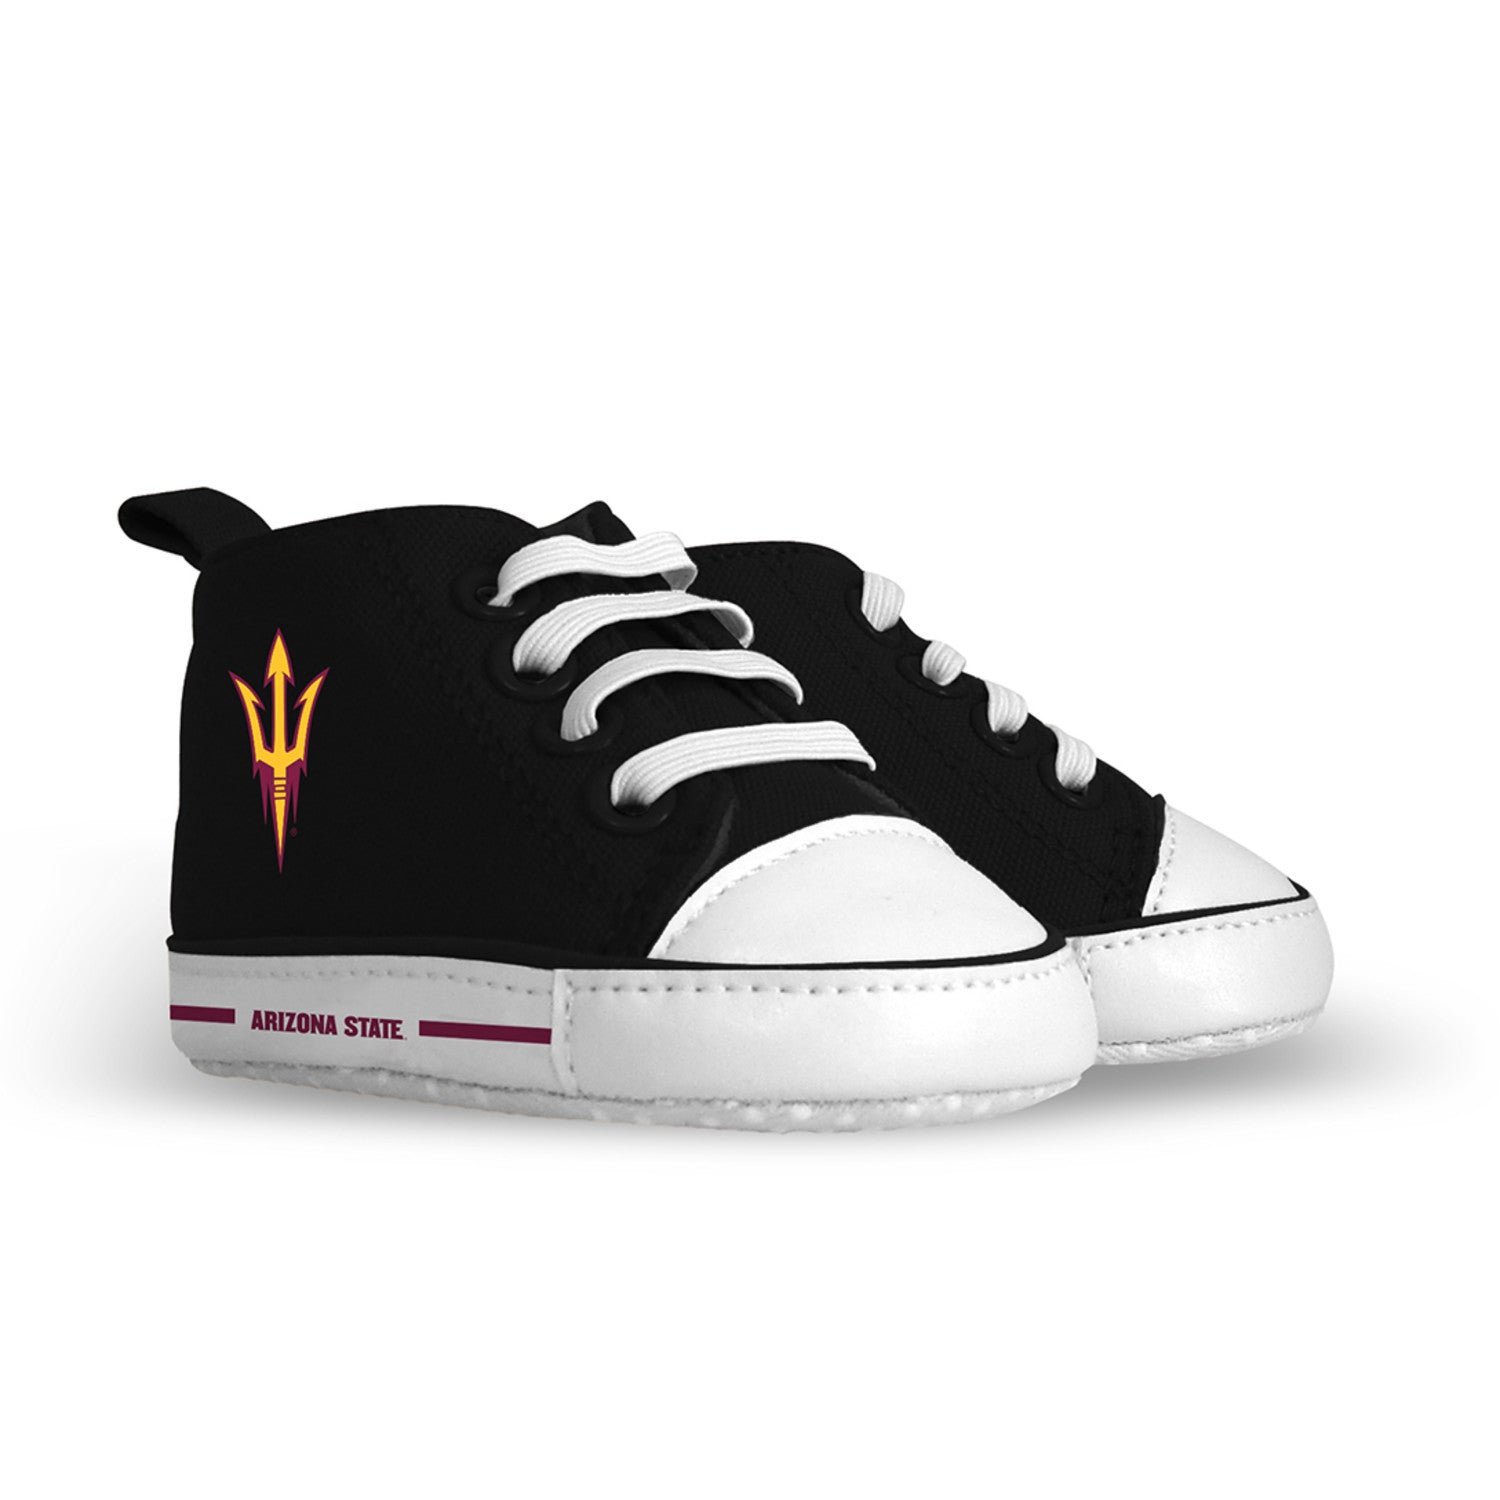 Arizona State Sun Devils Baby Shoes